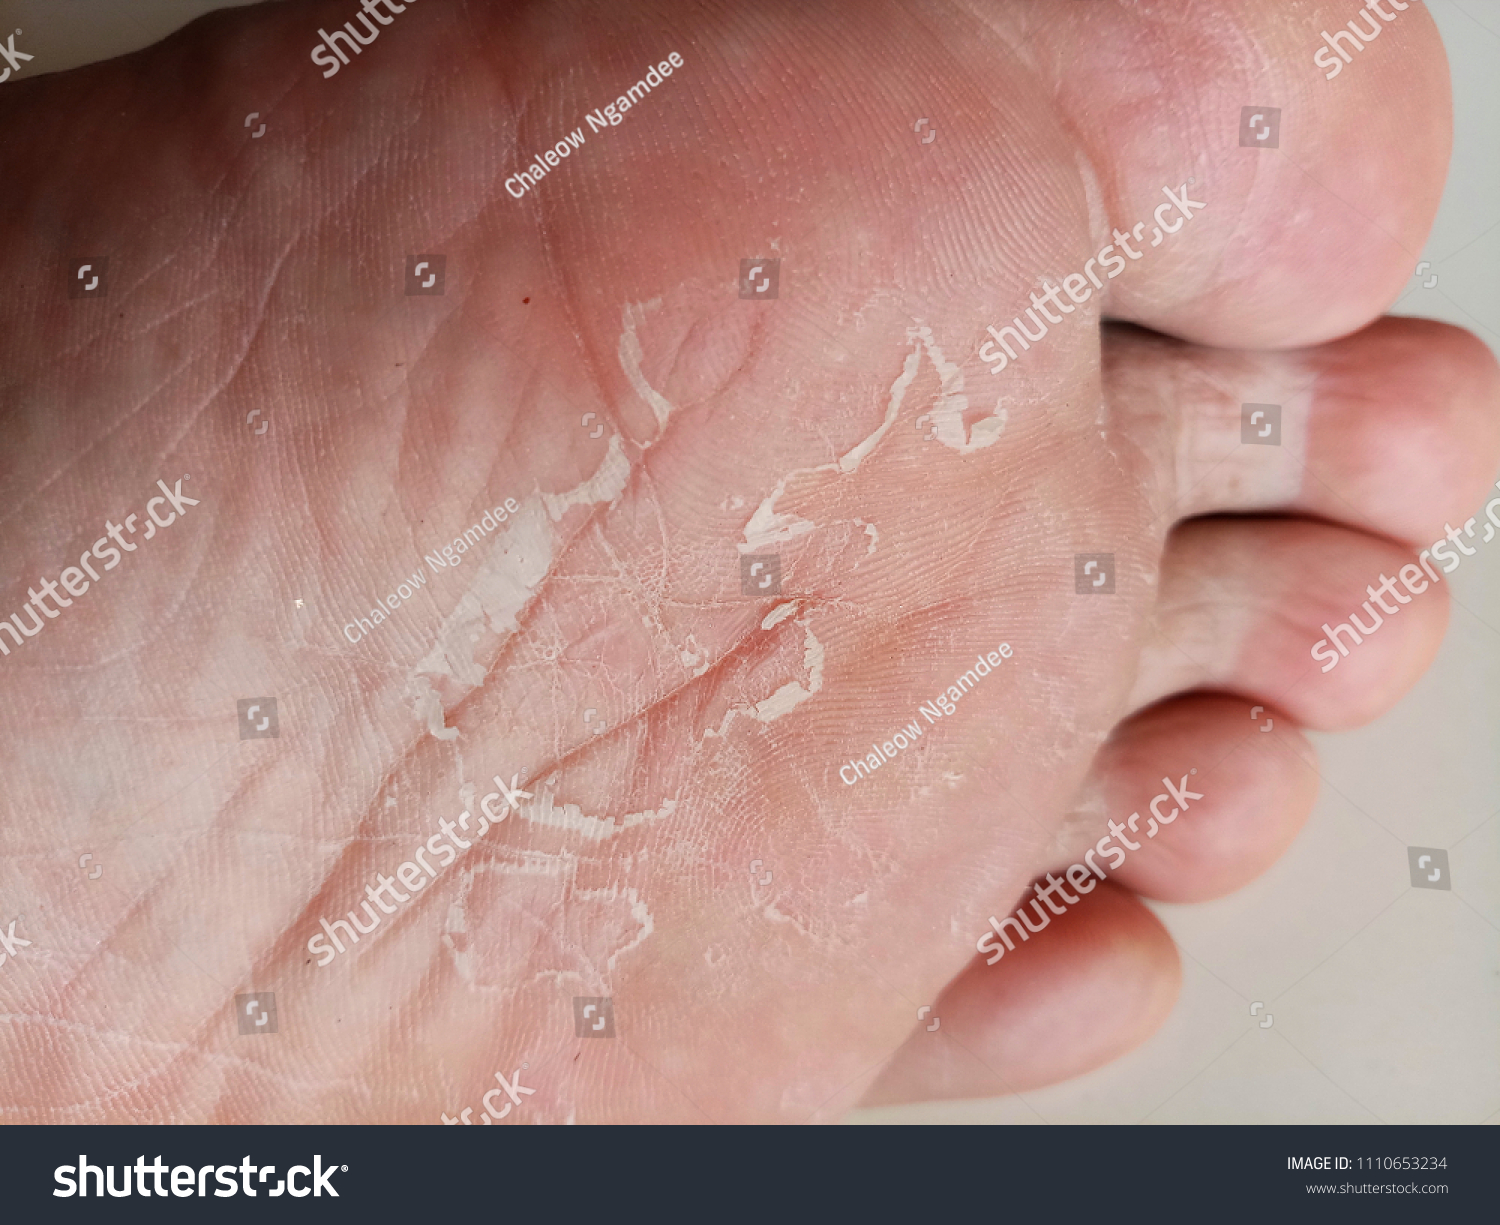 dry under feet